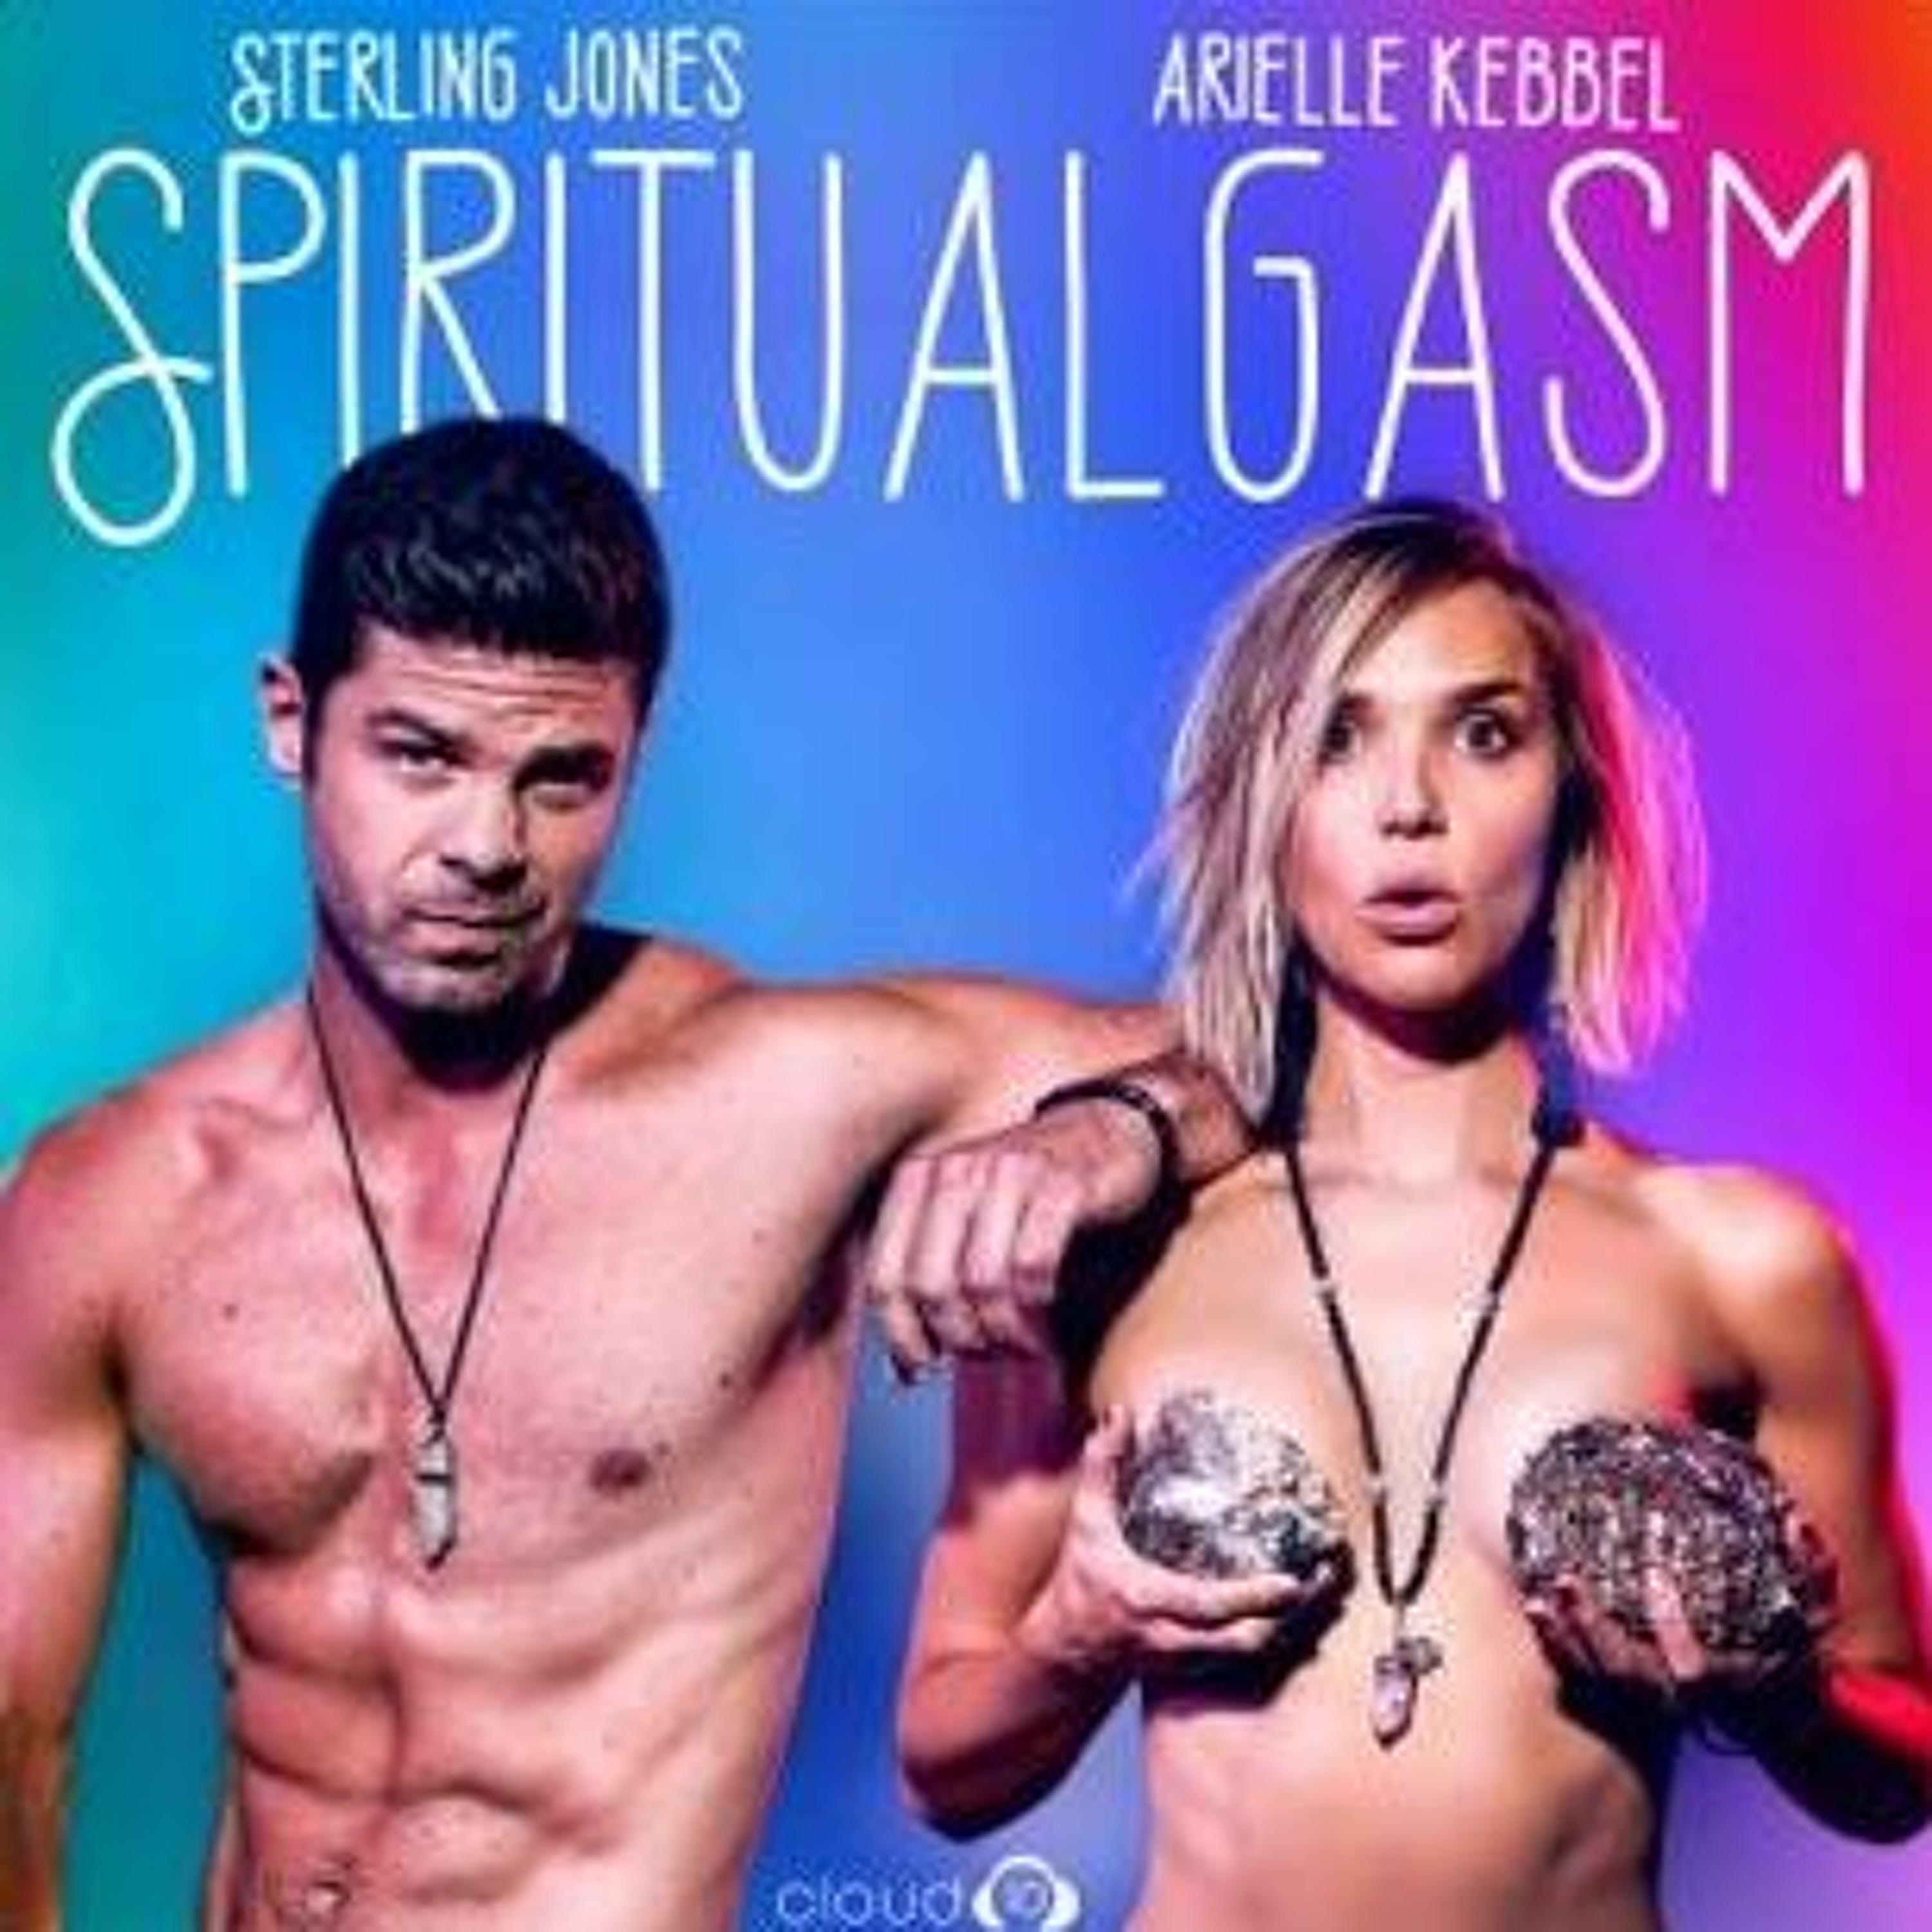 Spiritualgasm w/ Sterling Jones and Arielle Kebbel